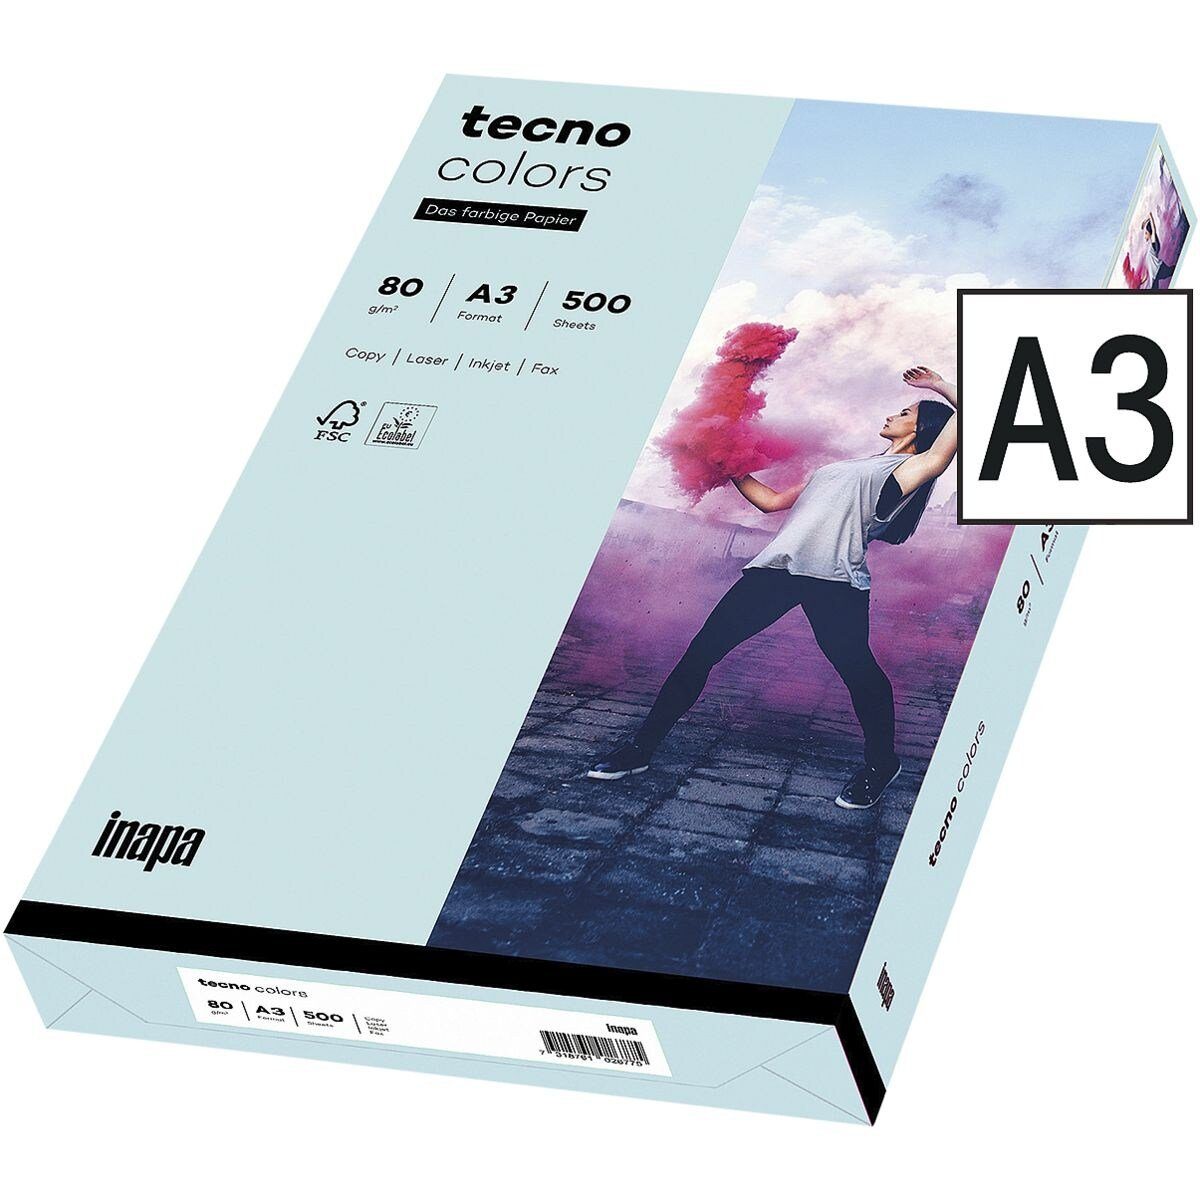 Inapa tecno Drucker- und Kopierpapier Rainbow / tecno Colors, Pastellfarben, Format DIN A3, 80 g/m², 500 Blatt hellblau